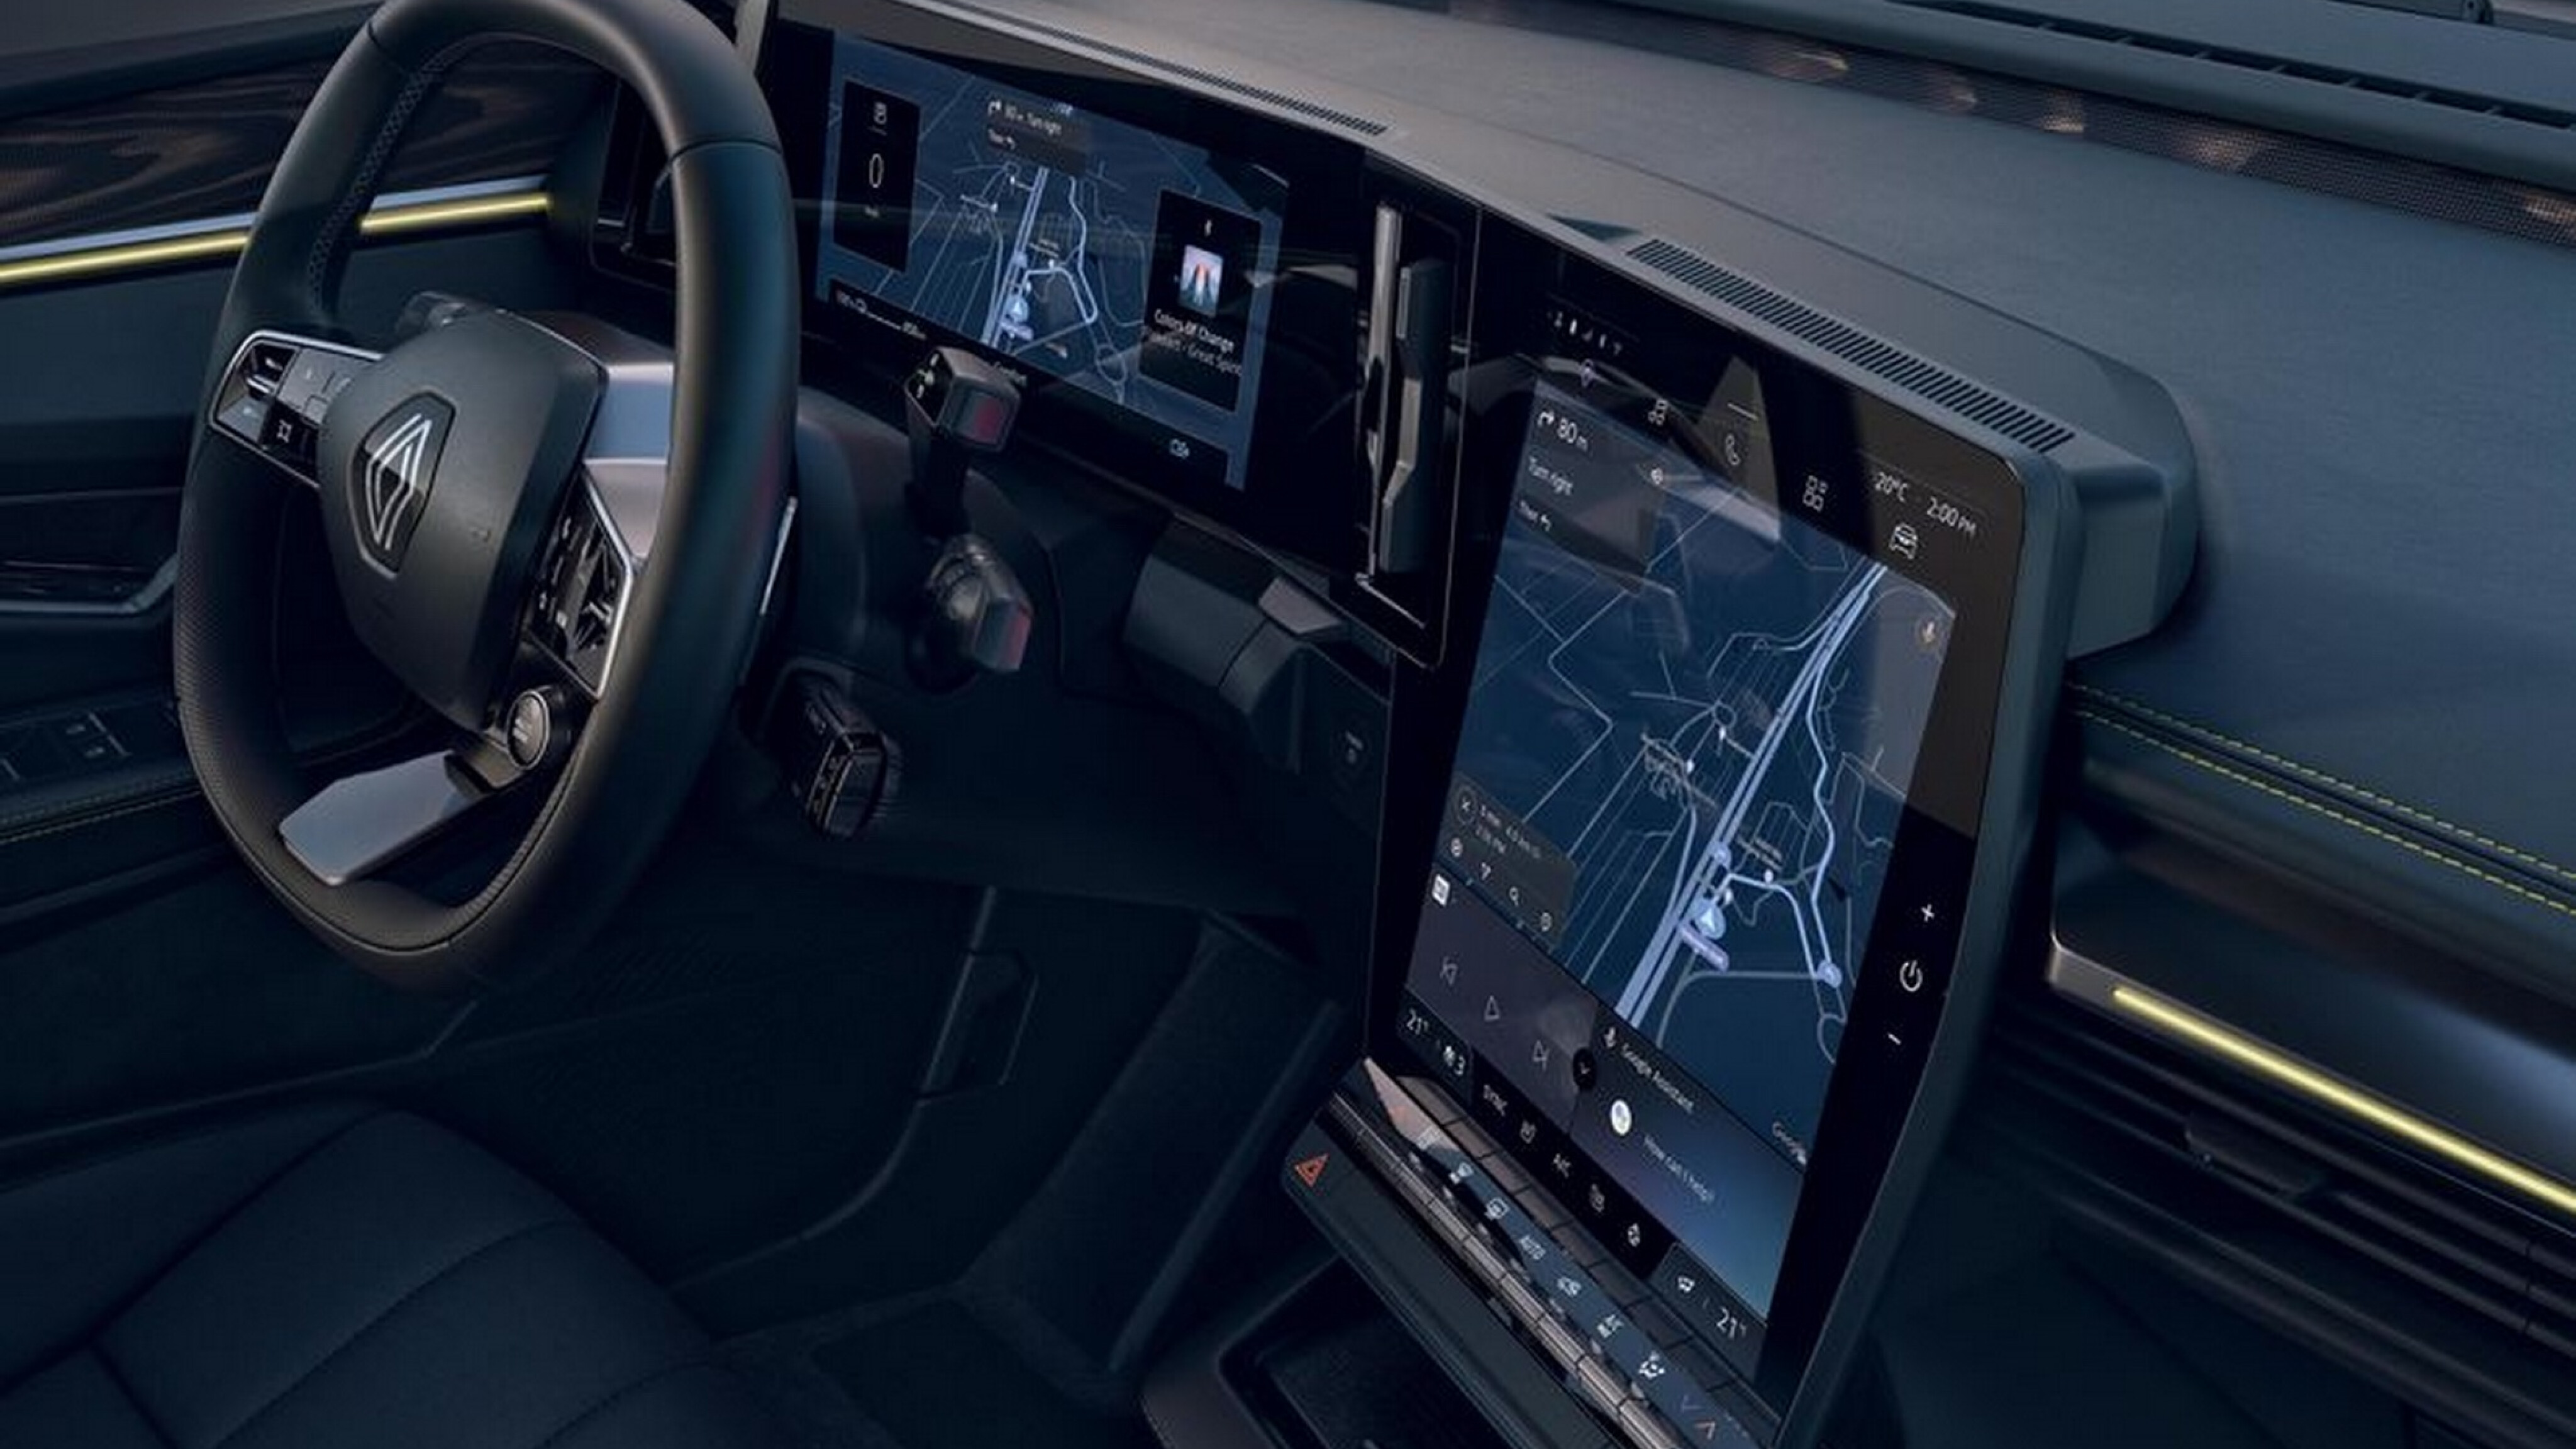 2022 Renault Megane E-Tech Electric interior shots teased